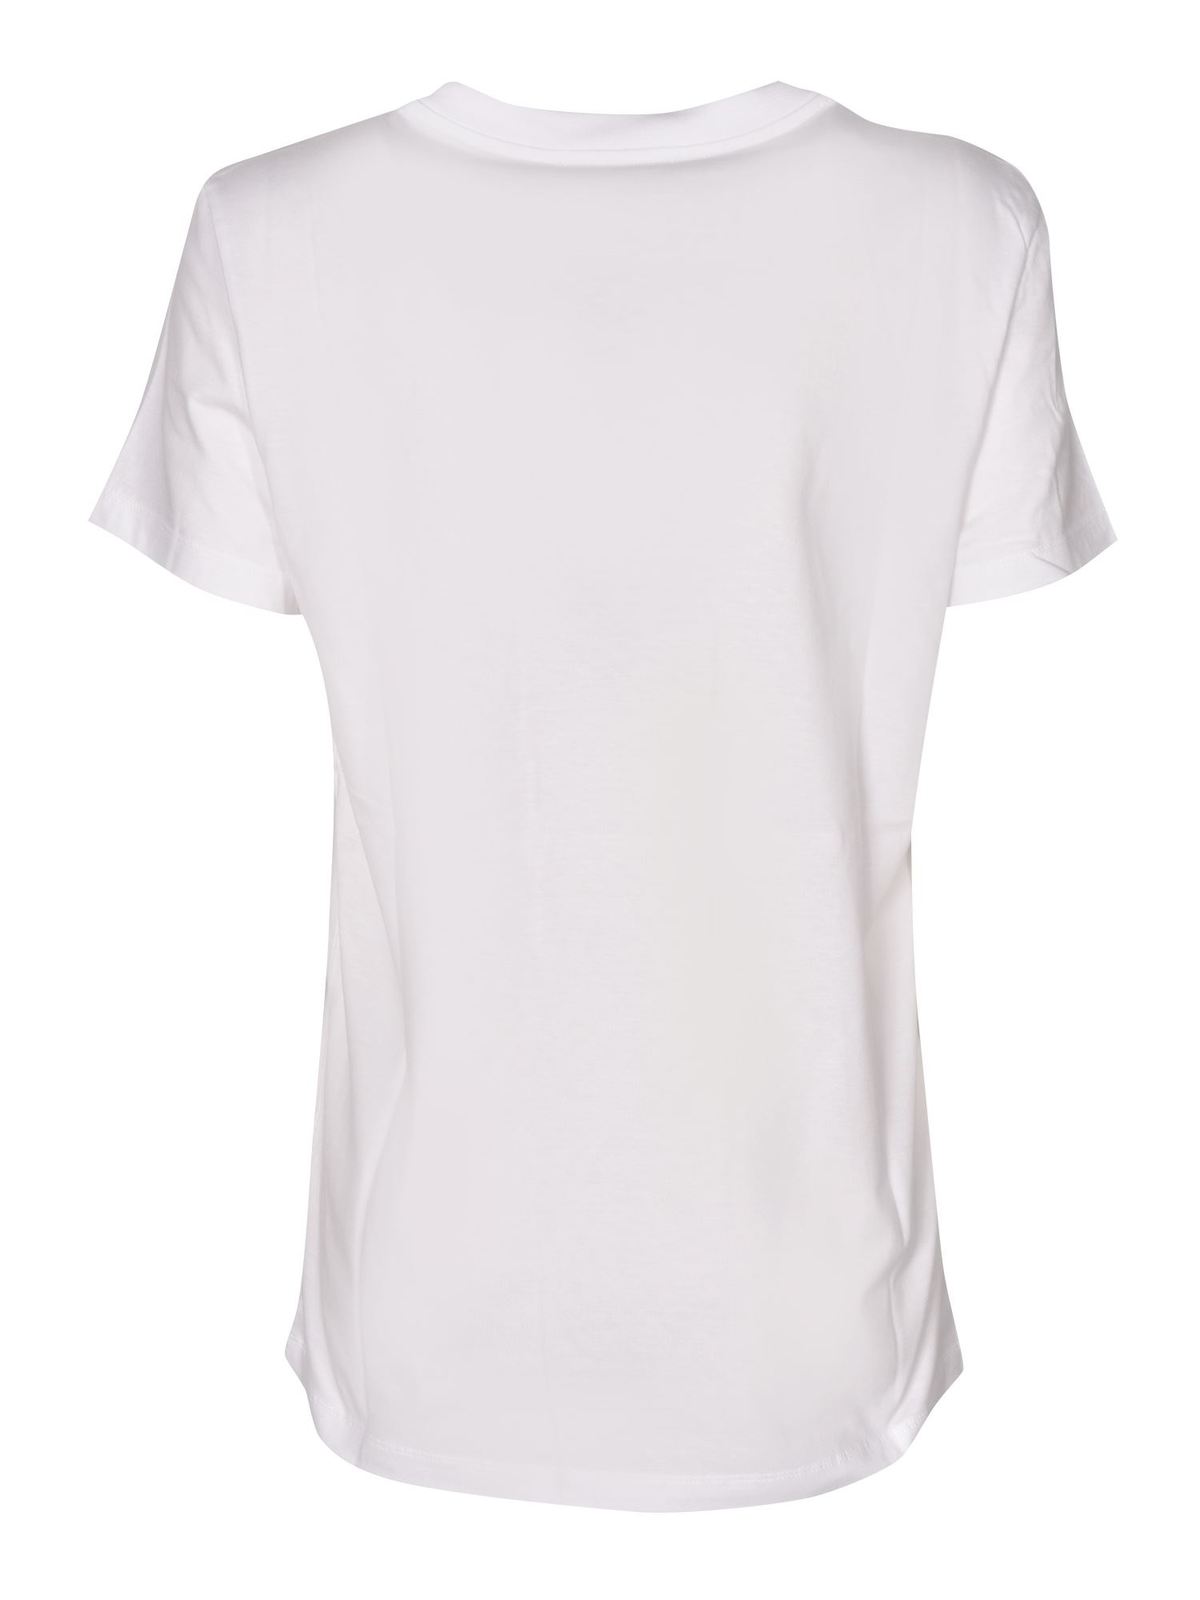 T-shirts Max Mara - Humor t-shirt in white and beige - 19410212650012